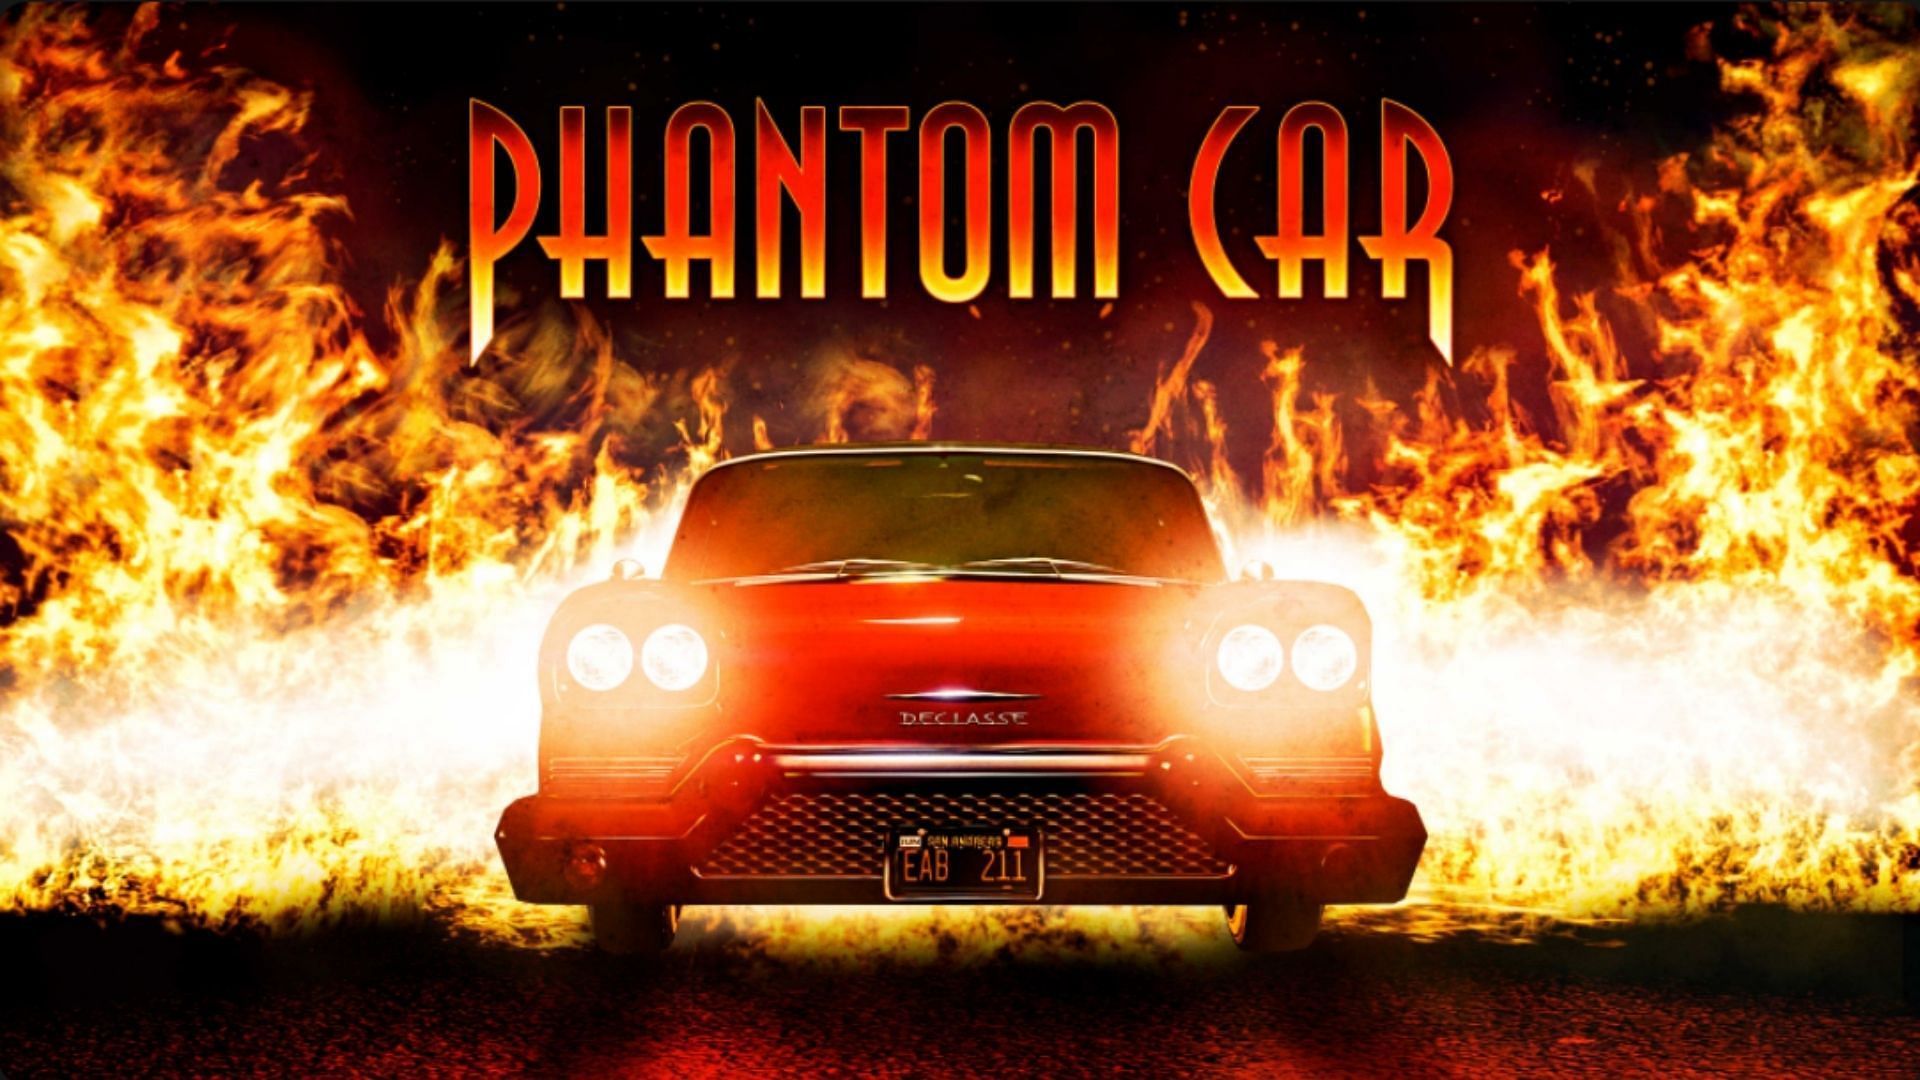 Phantom Car in GTA Online (Image via Rockstar Games)